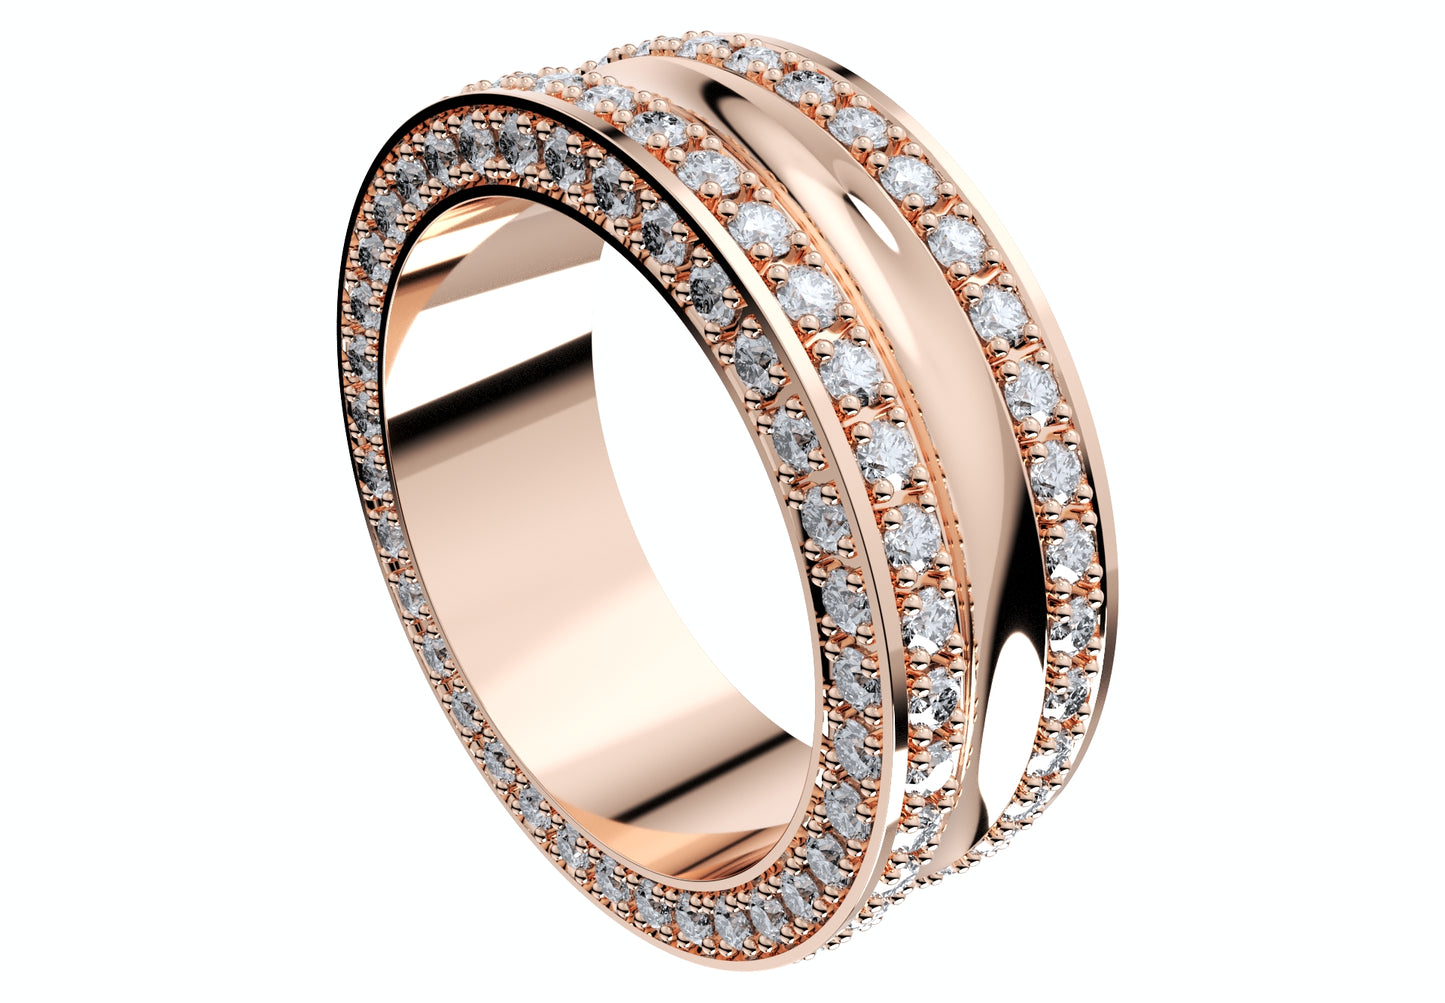 Wedding Ring Set Women Men Ring CAD Design-PSJM001V6